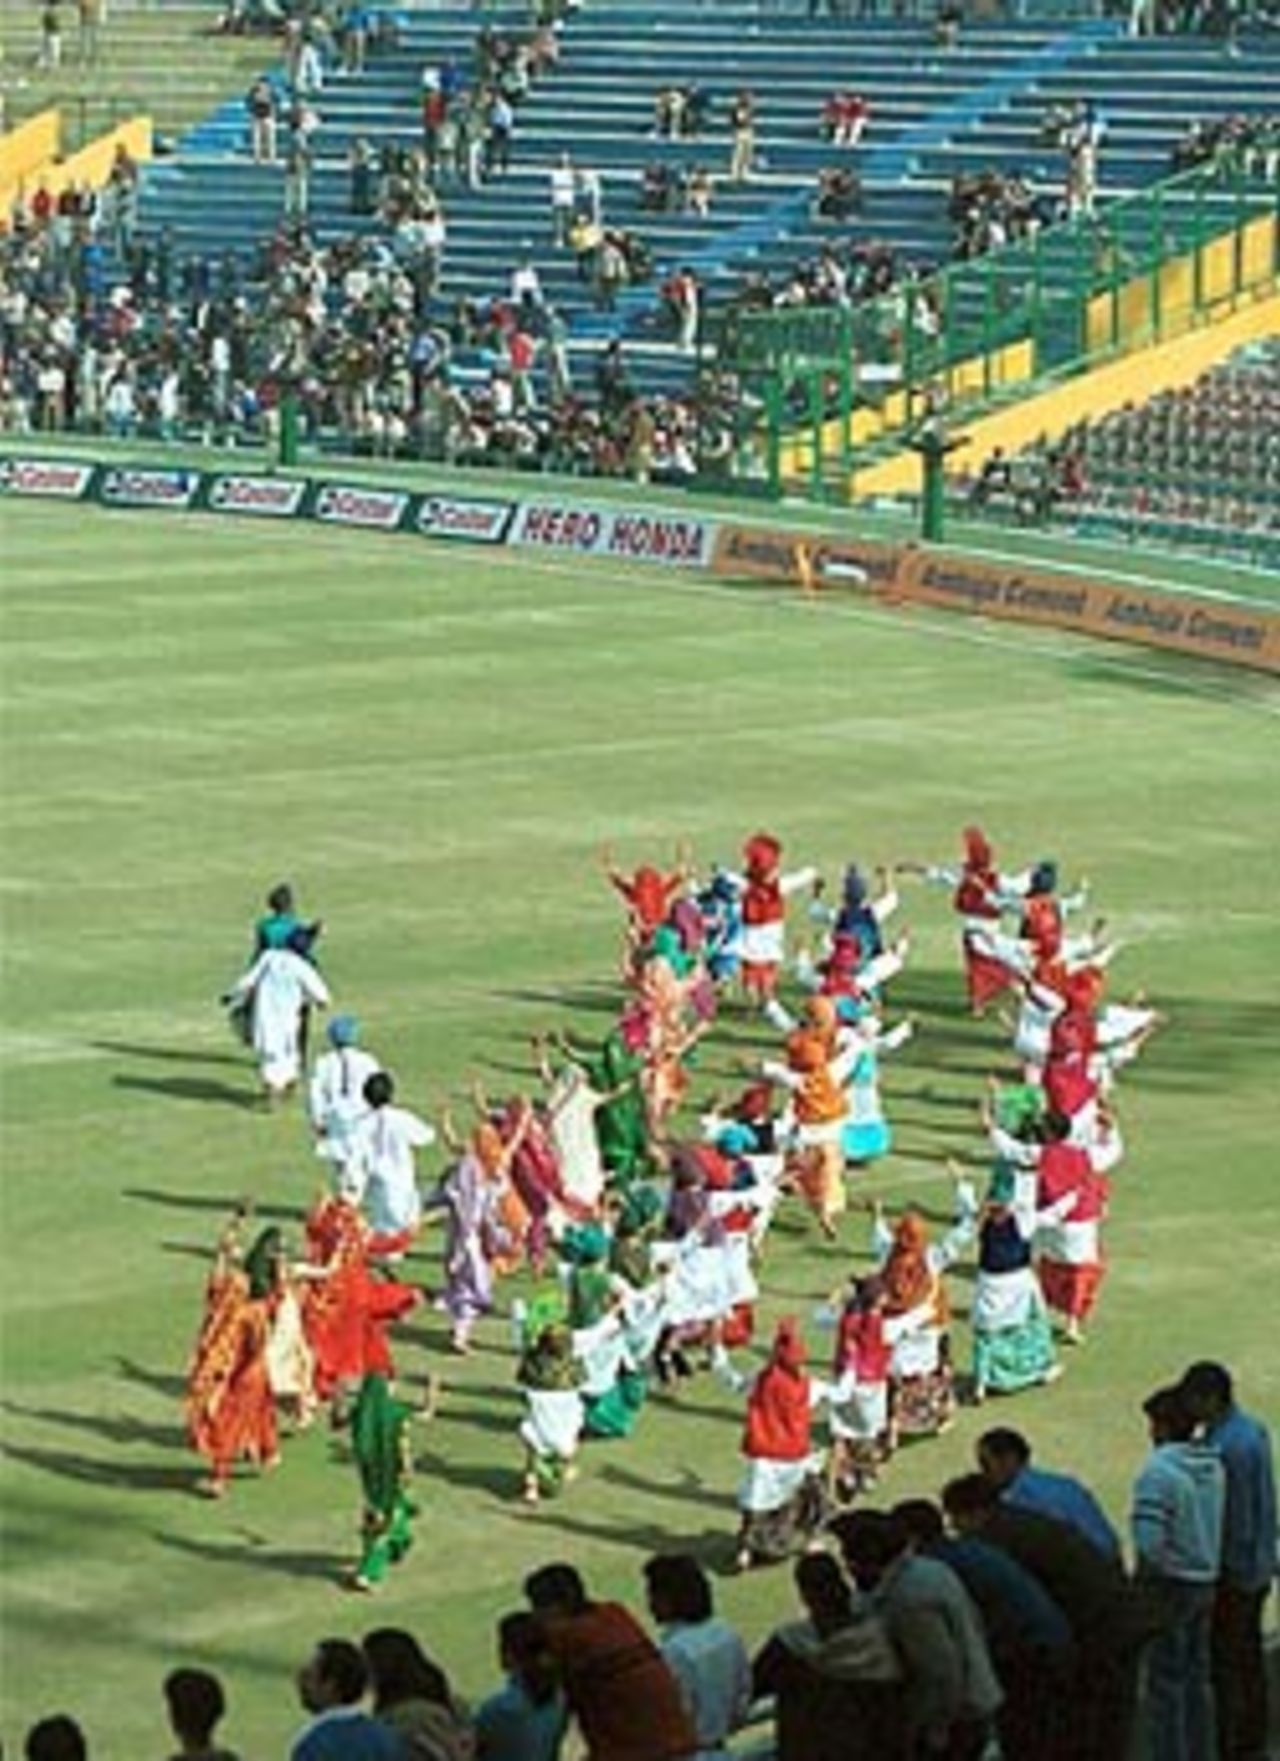 India v England, 1st Test match, Day One, Punjab C.A. Stadium, Mohali, Chandigarh, 3-7 Dec 2001